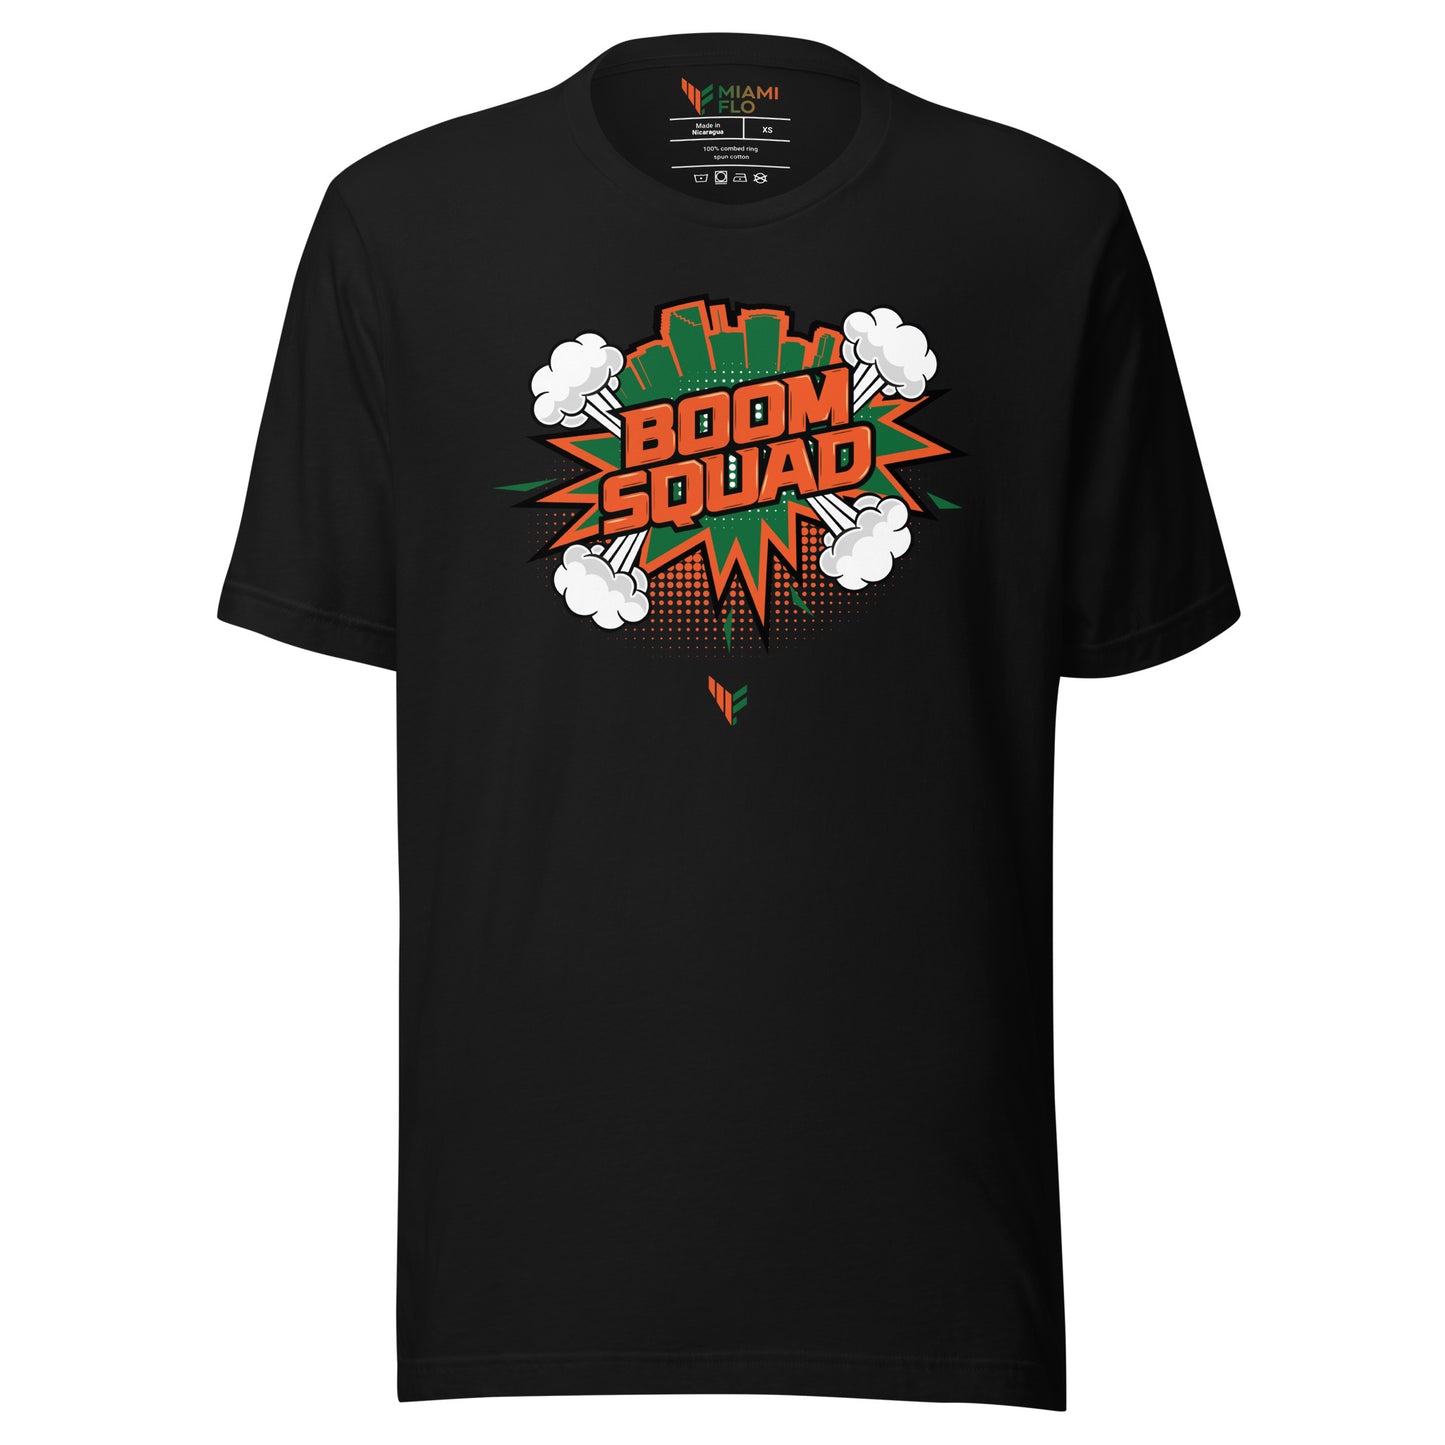 Miami Boom Squad Shirt - Designed By Jas